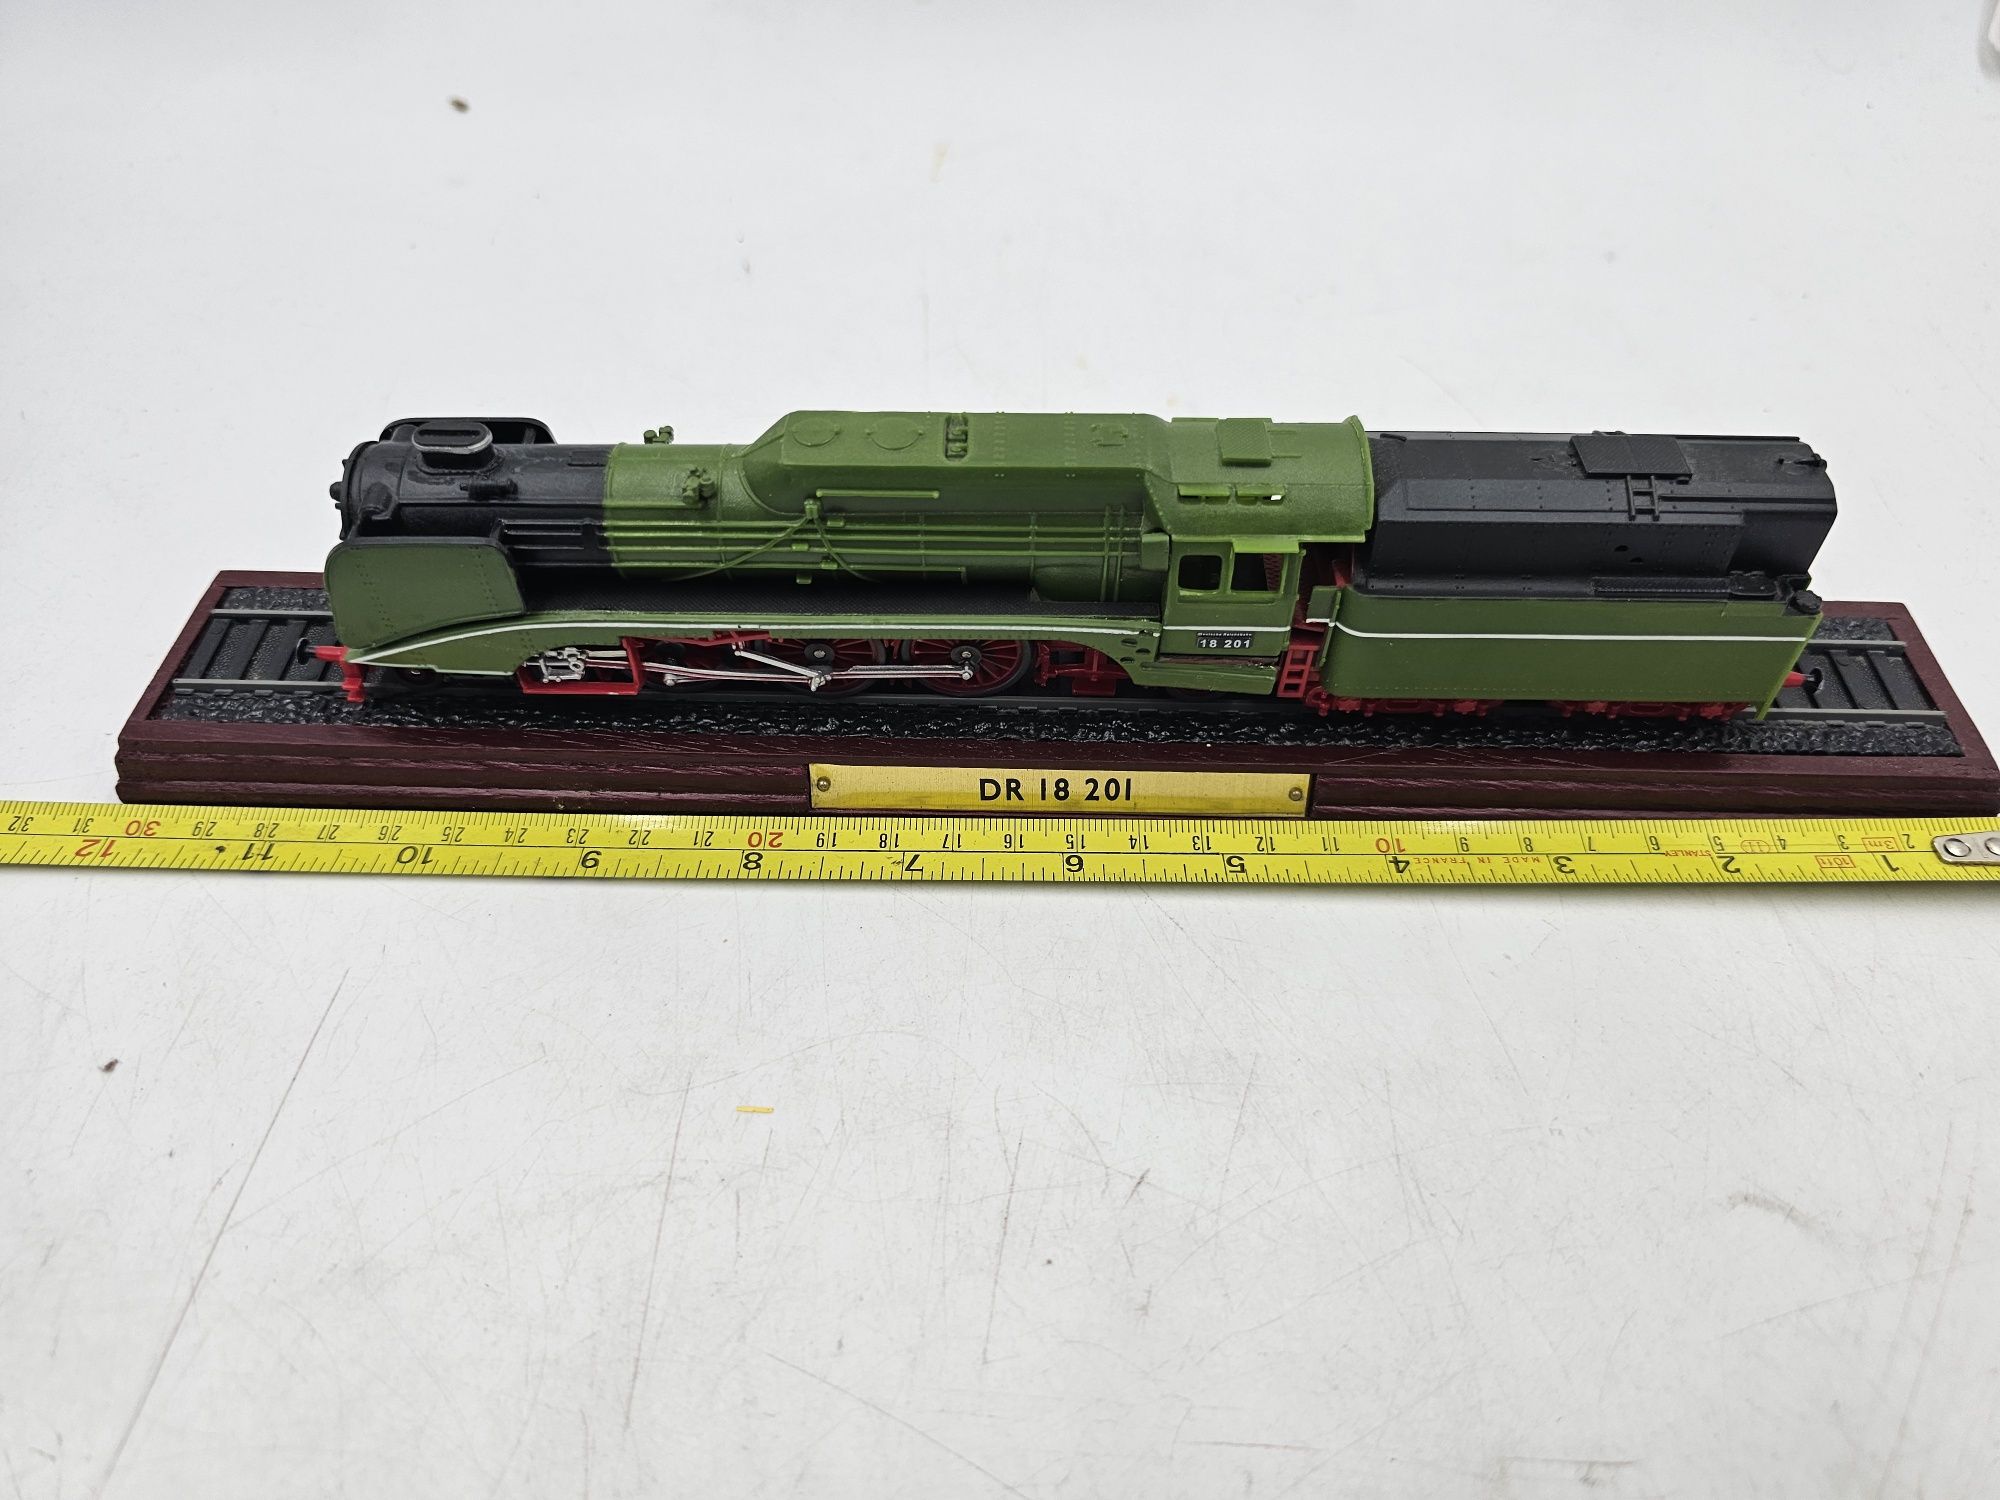 Model lokomotywy  HO pacific 231. 18201 DR